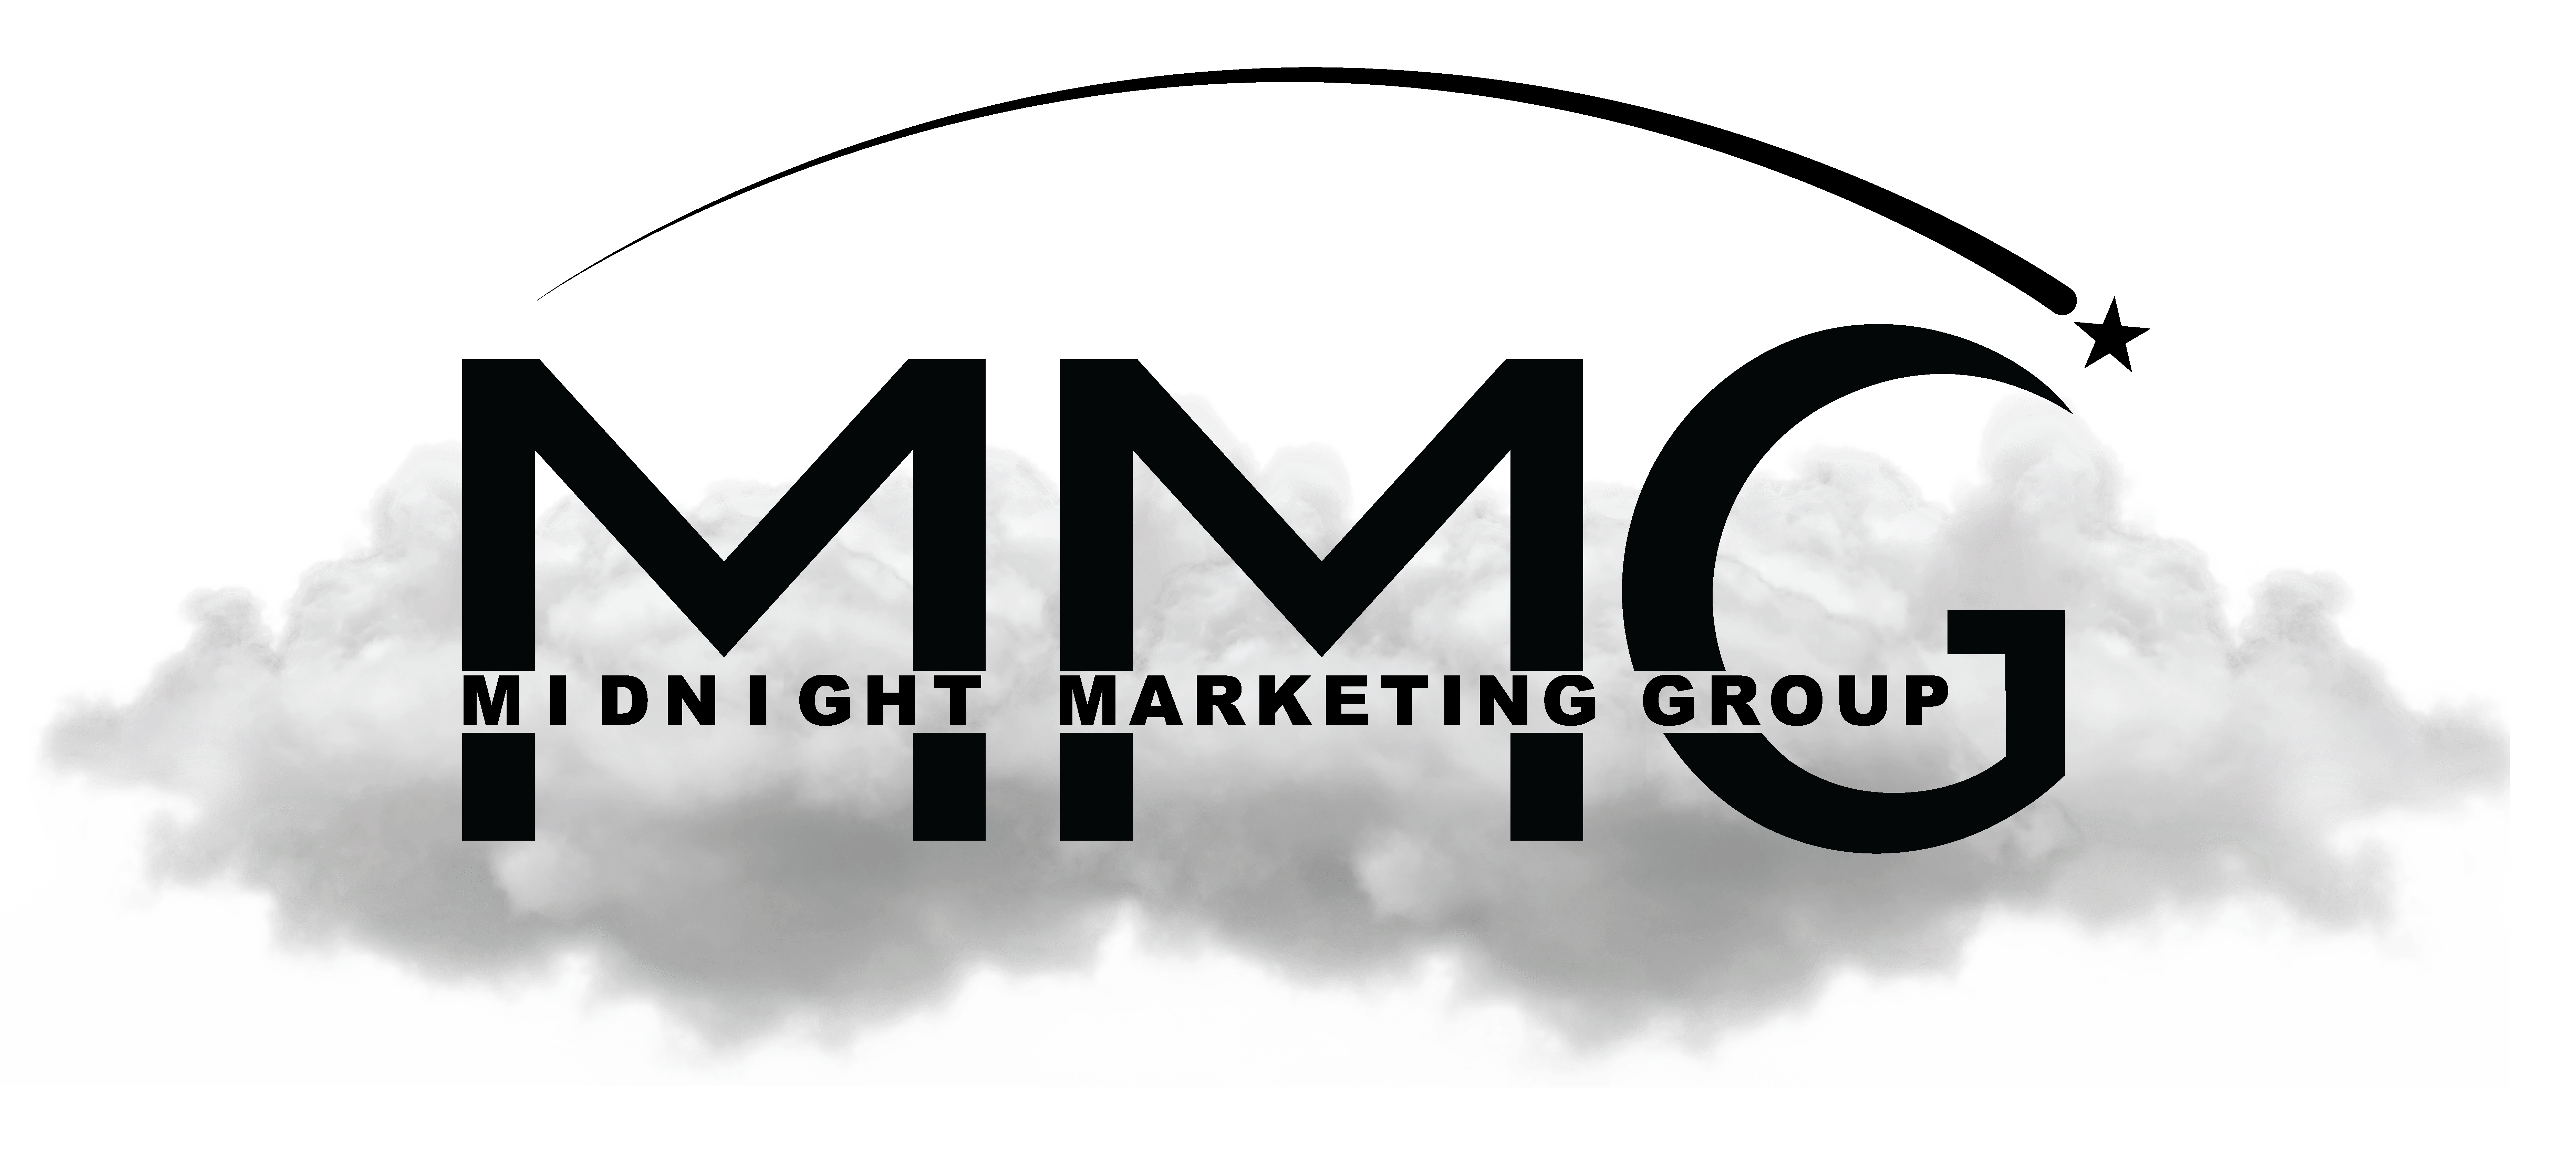 Midnight Marketing Group